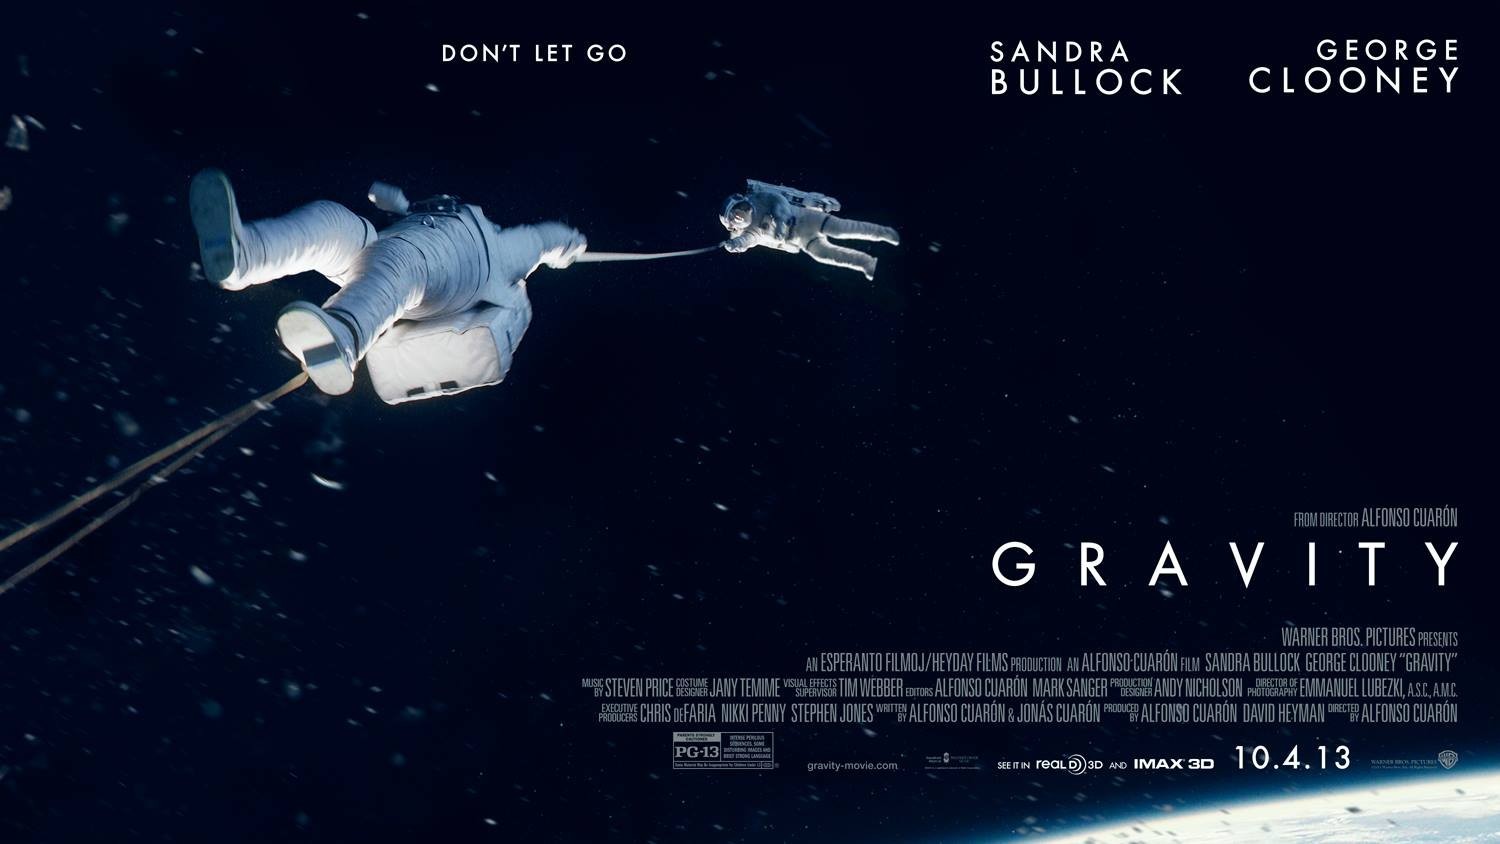 Alfonso Cuarons 'Gravity' teaser: "I've Got You"